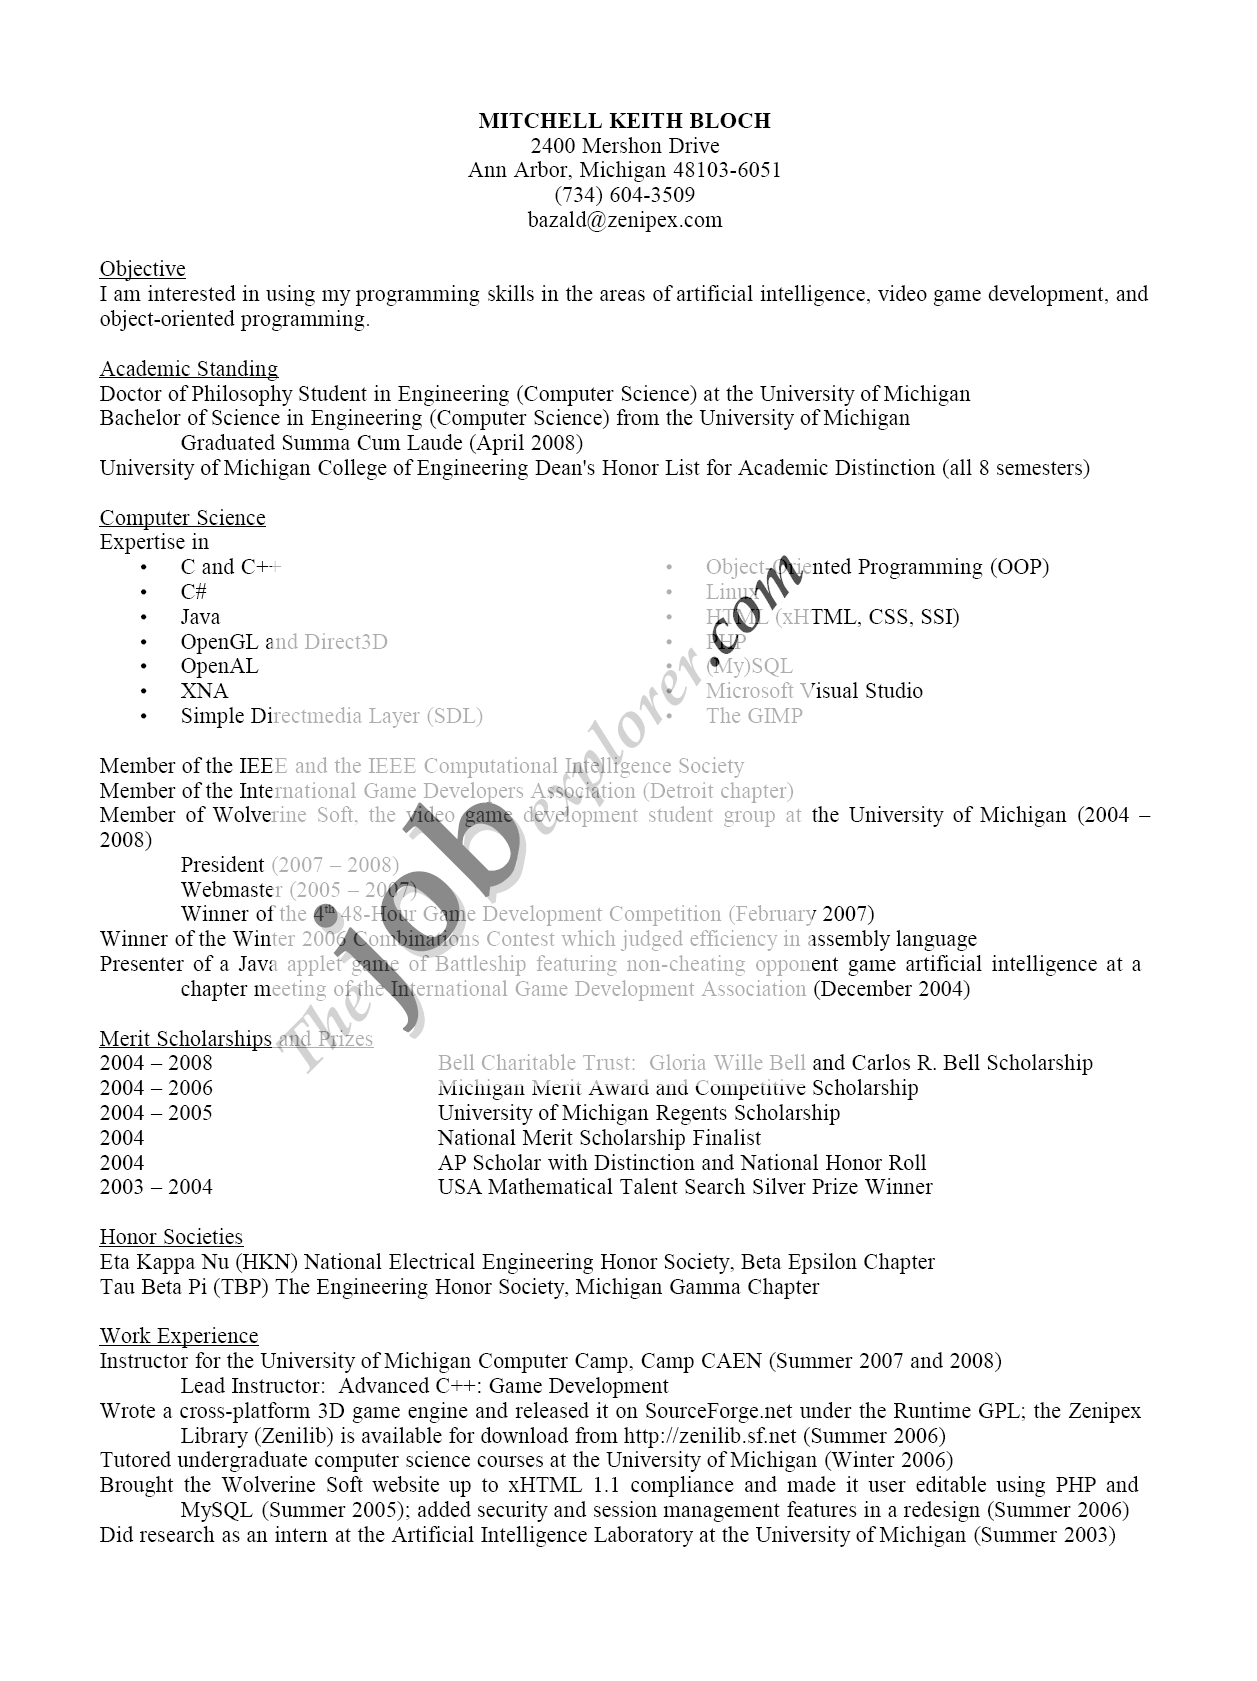 resume template resume guide resume format resume vs vitae sample ...